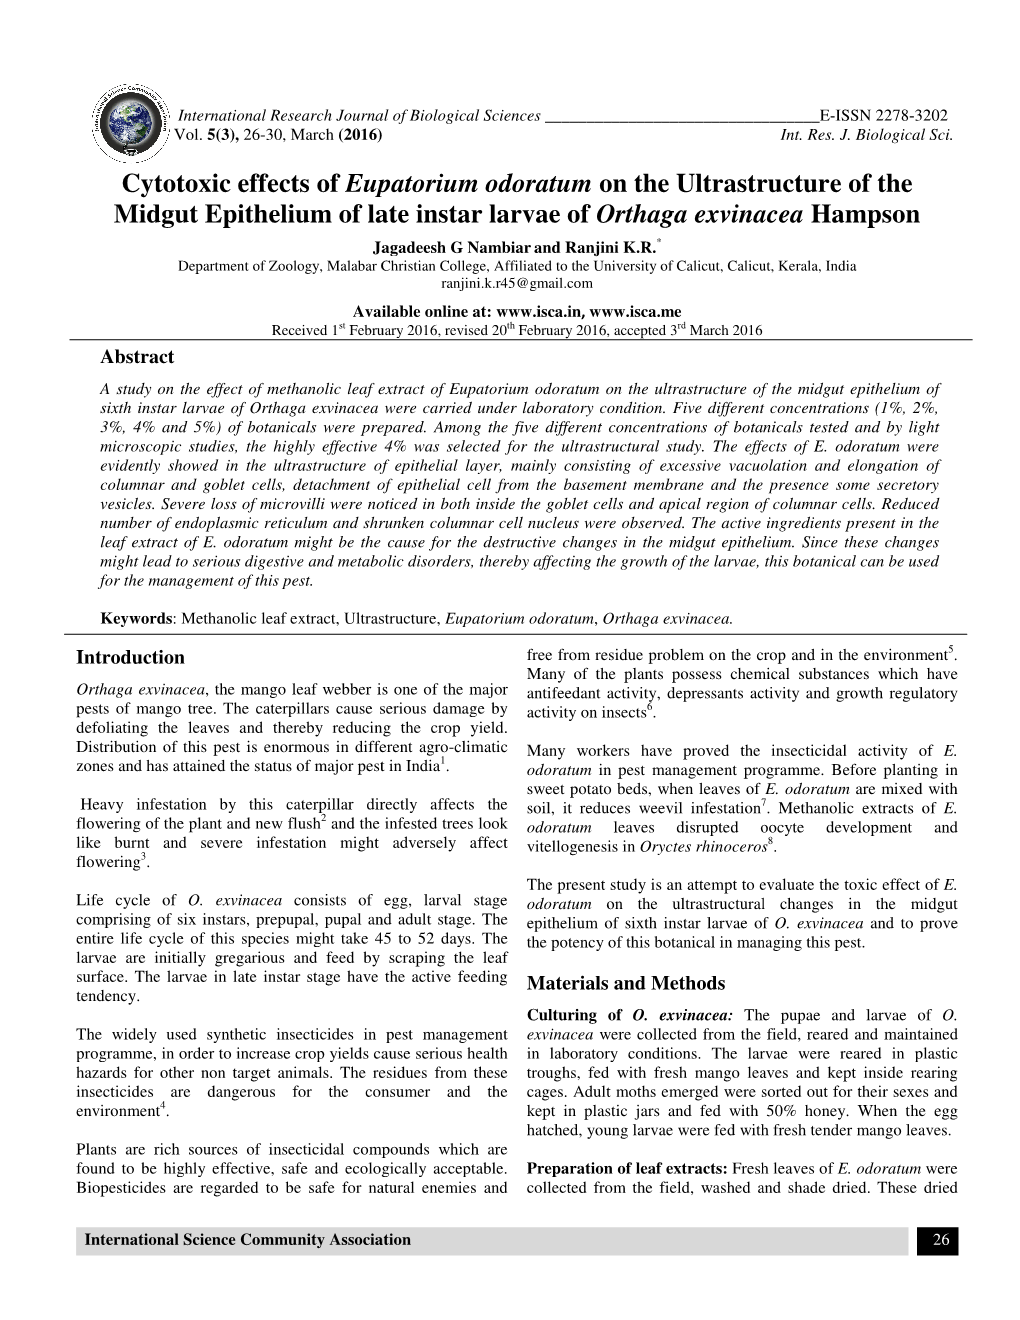 Cytotoxic Effects of Eupatorium Odo Midgut Epithelium of Late Instar Lar